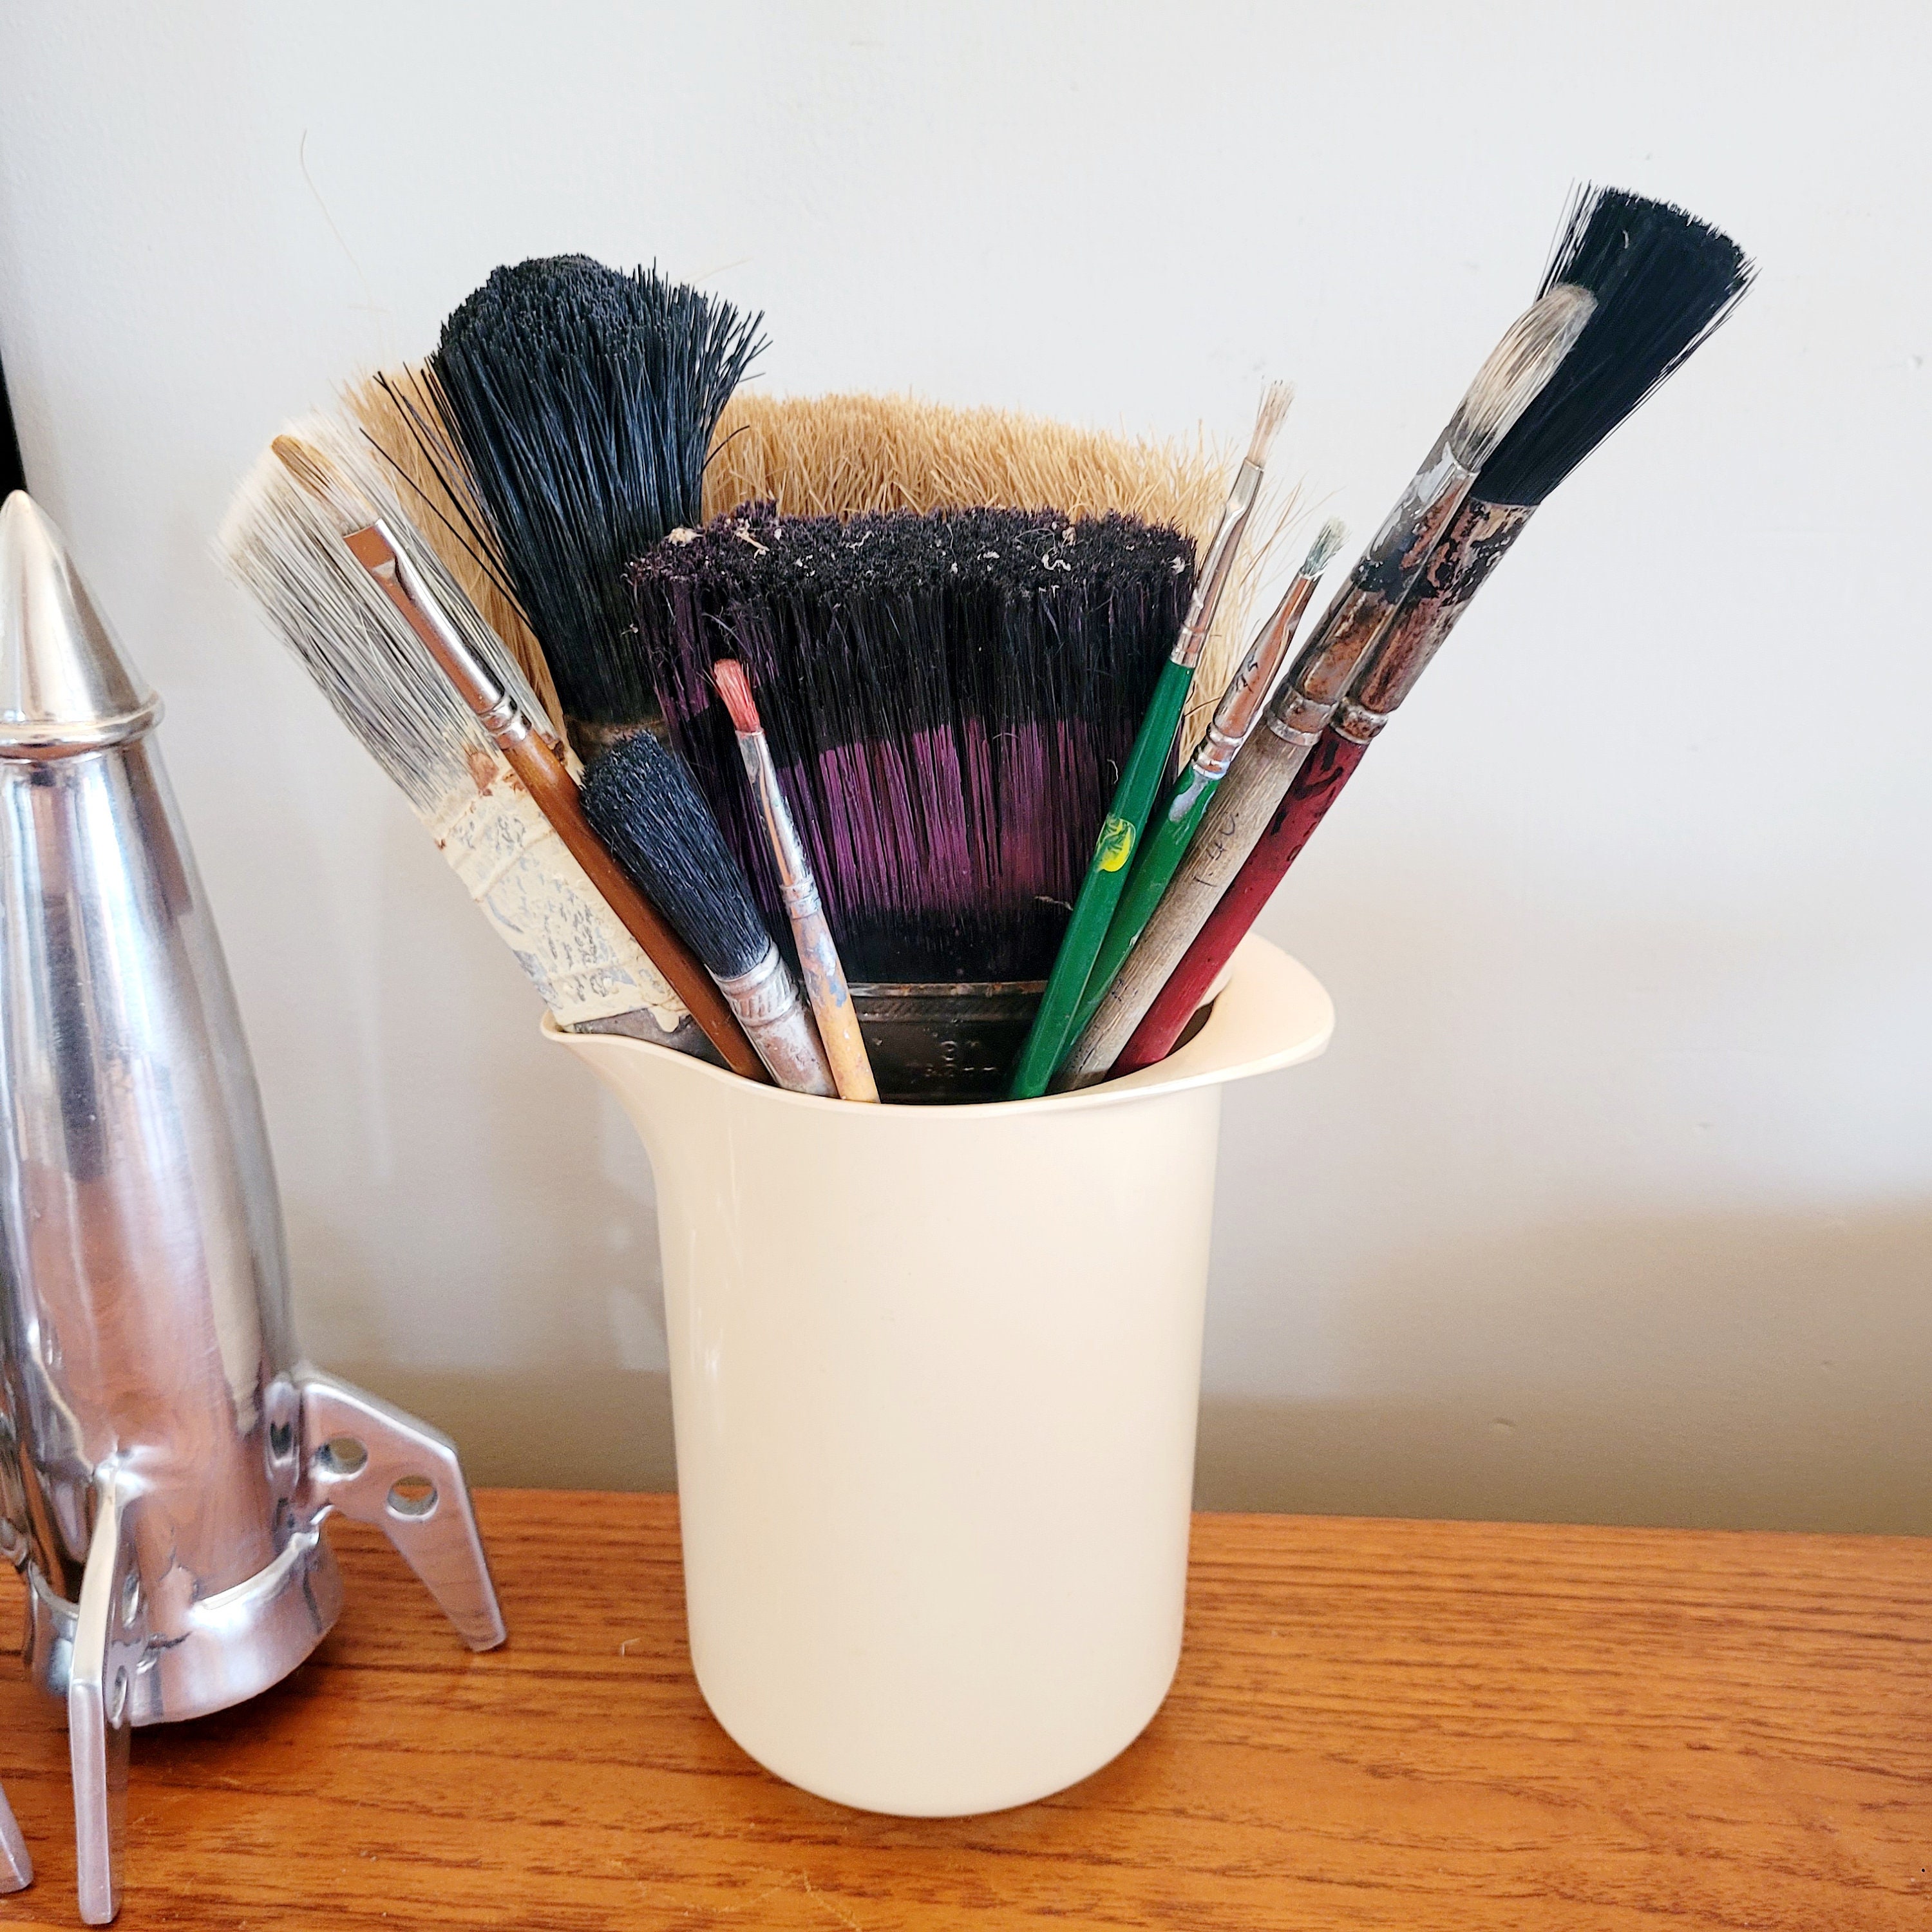 10 Pcs/lot Thin Baking Tools Watercolor Pastry Artist Paint Brush